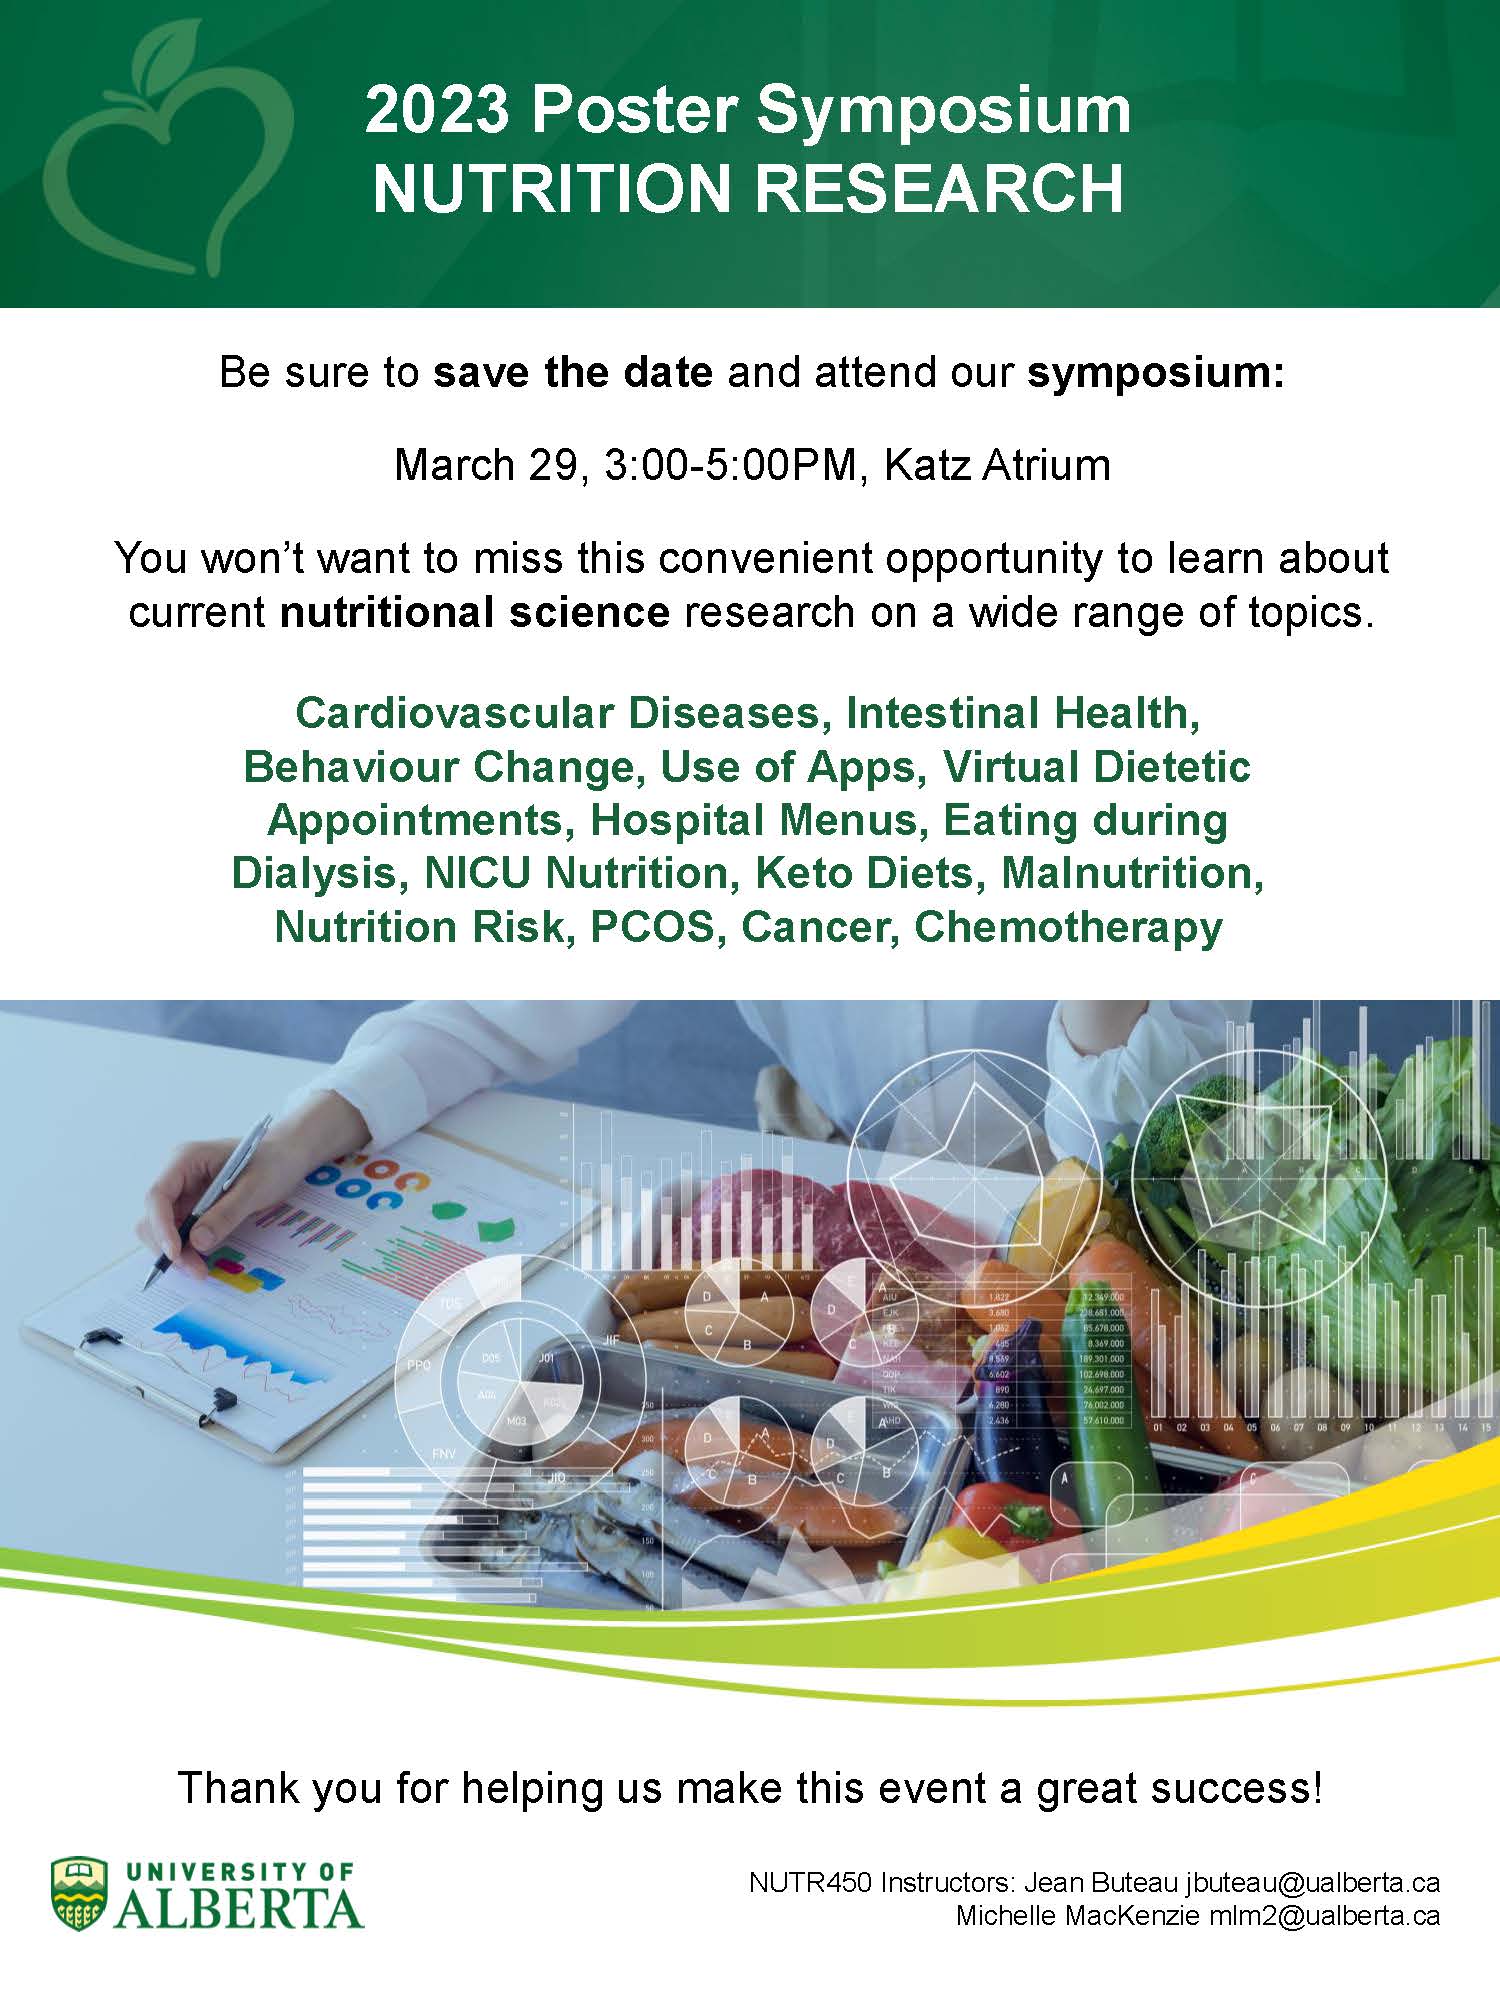 Poster Symposium Nutrition Research March 29, 2023 3-5pm Katz Atrium